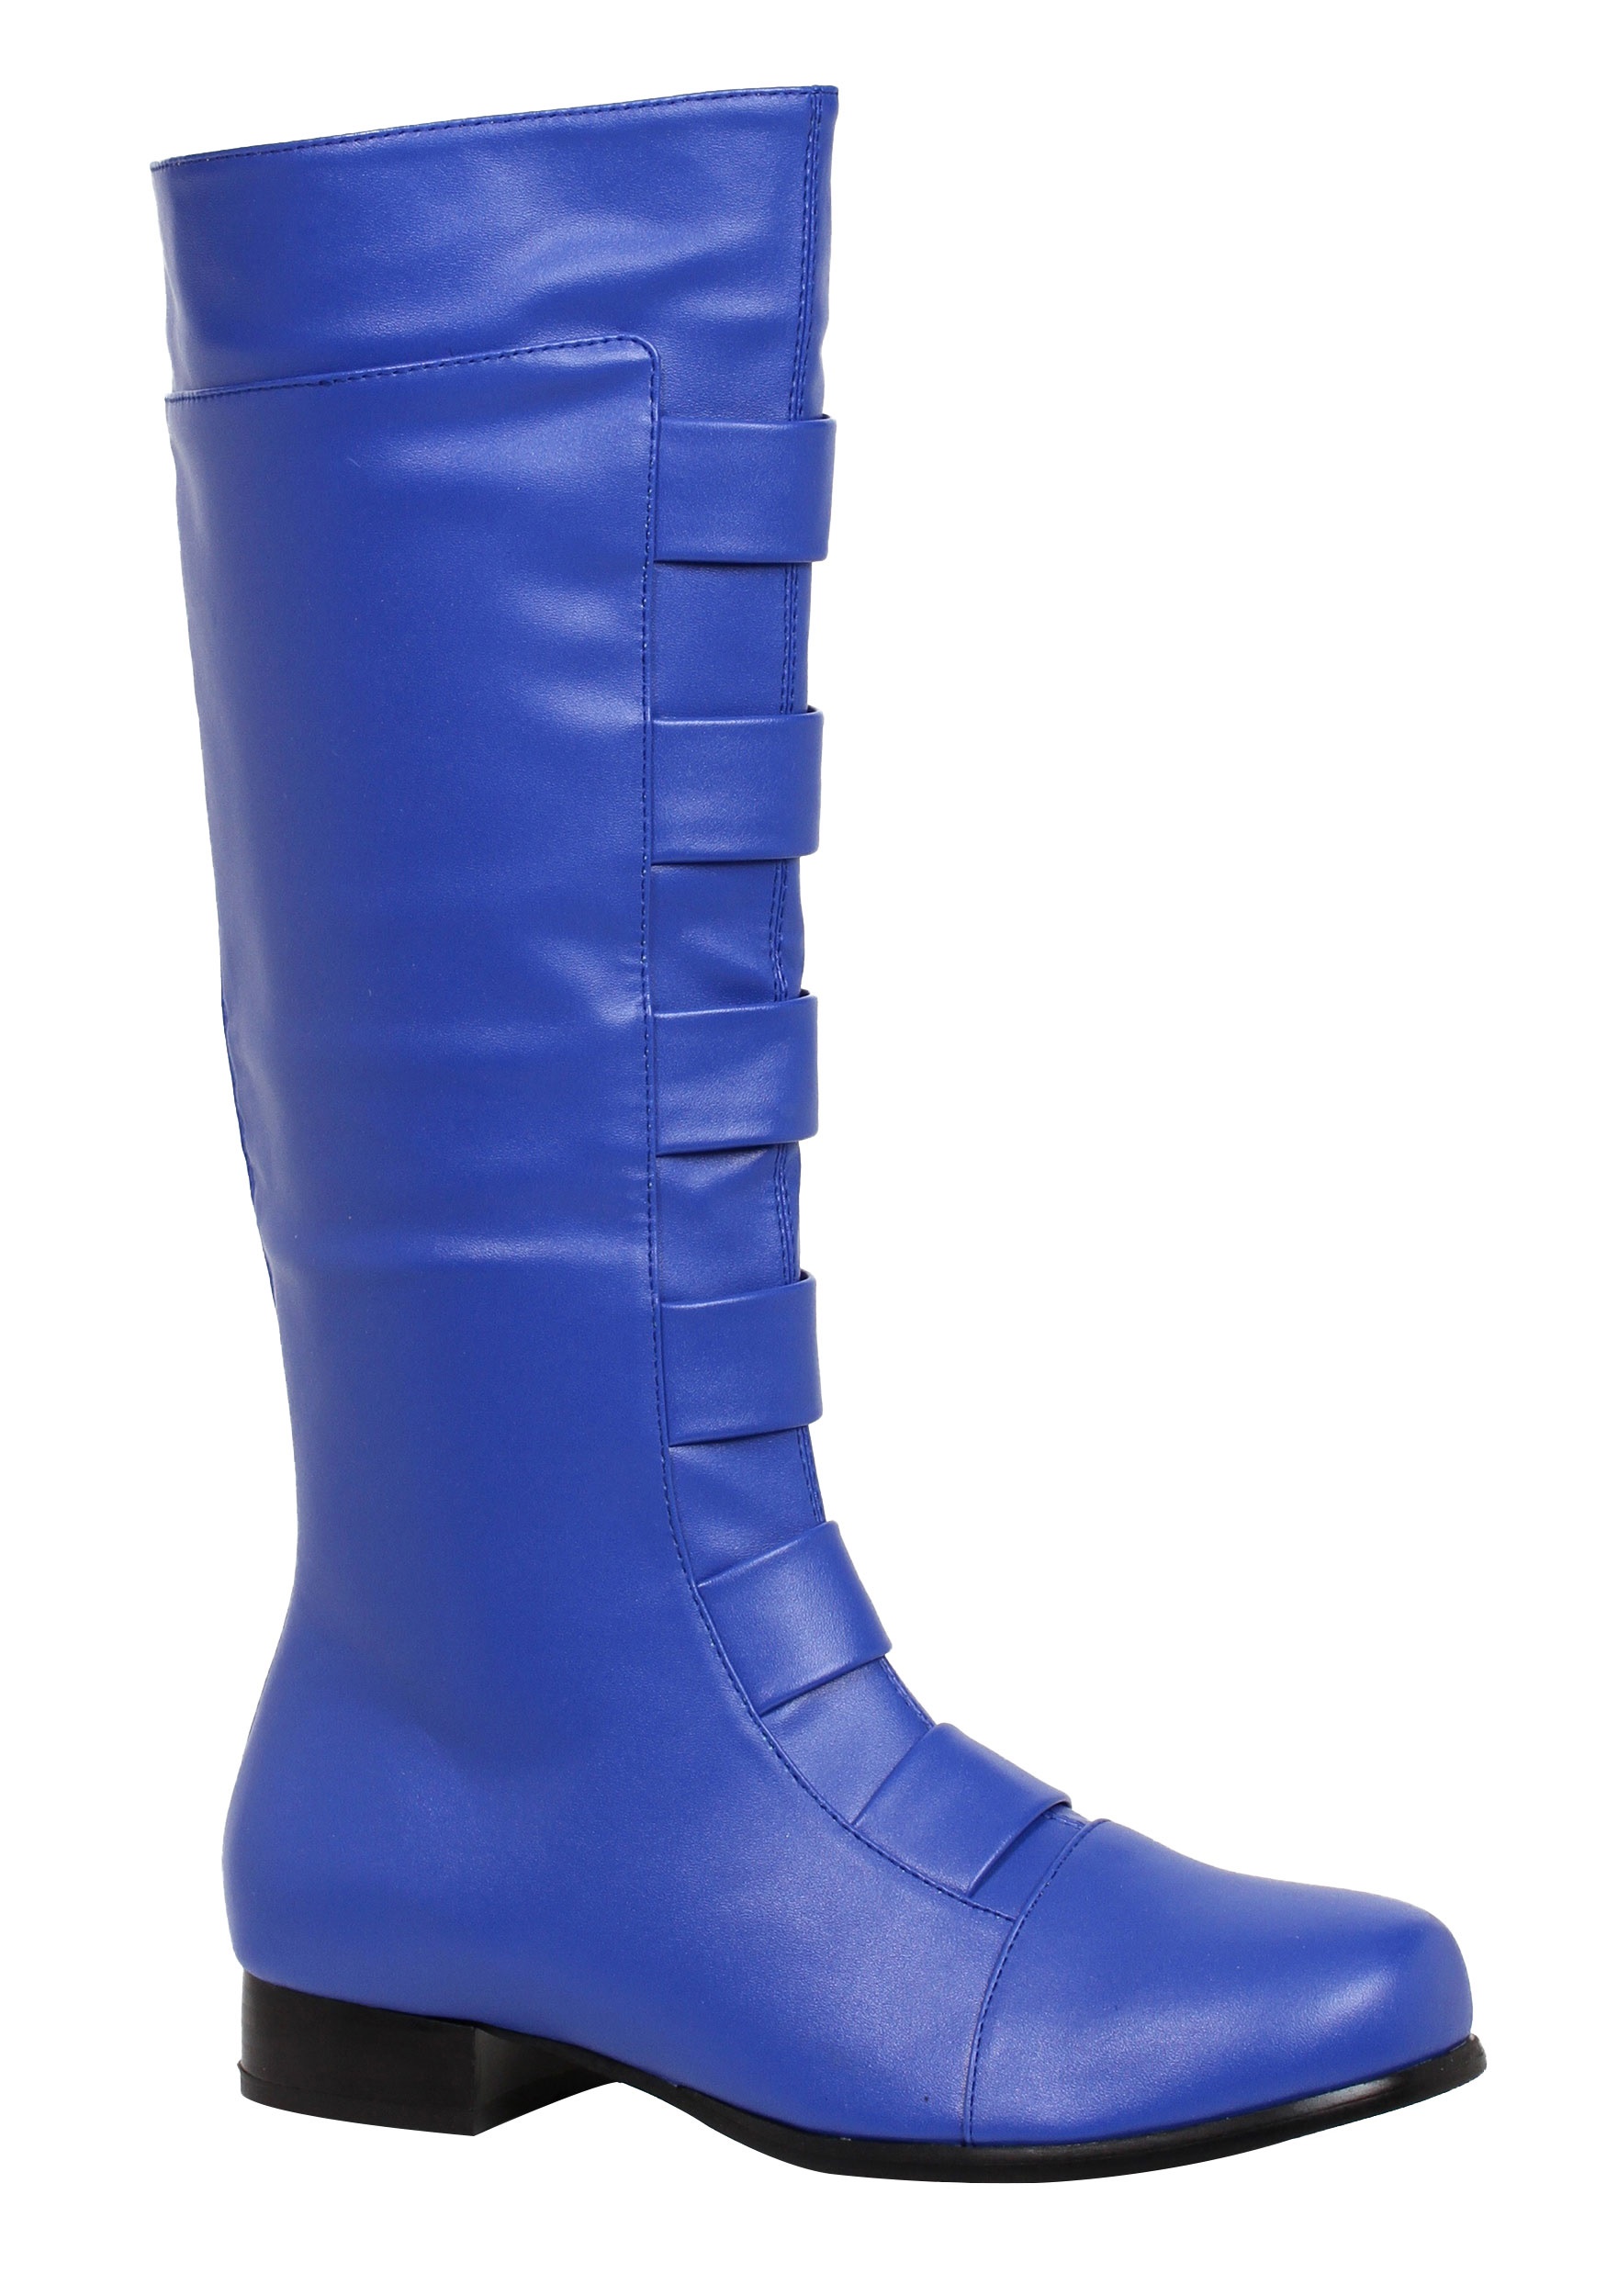 blue boots adult blue superhero boots reqozkw